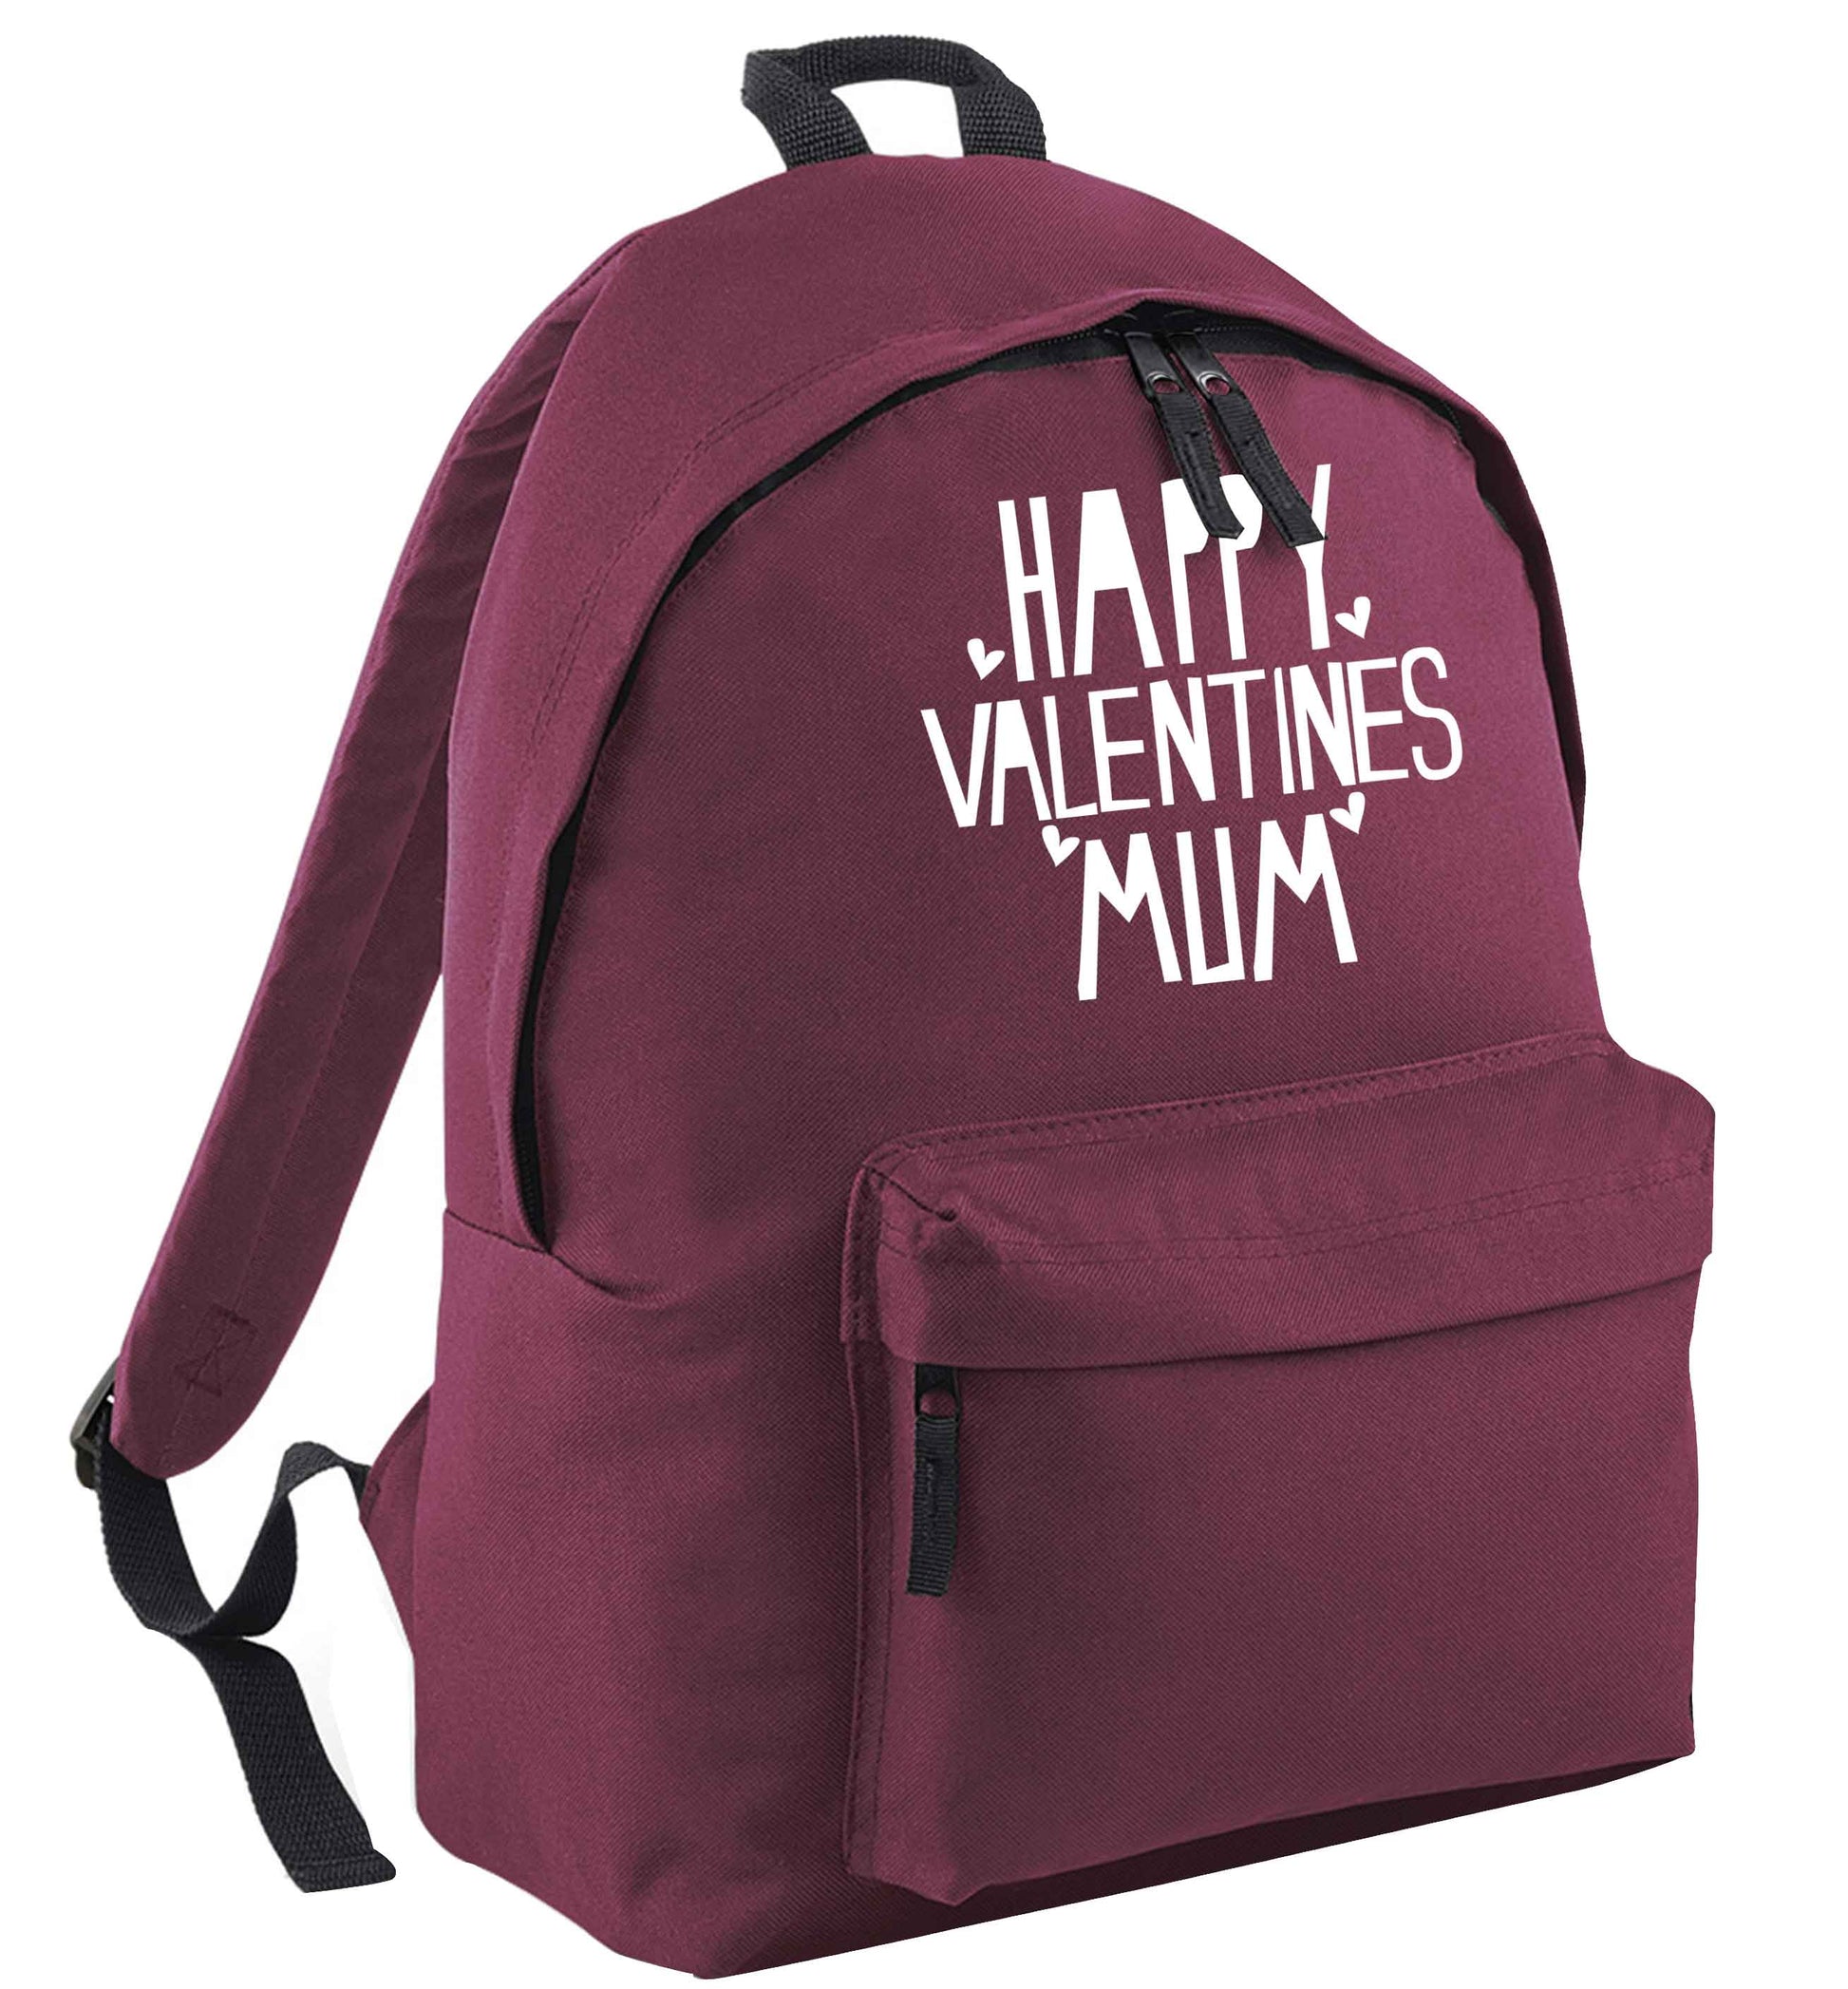 Happy valentines mum black adults backpack